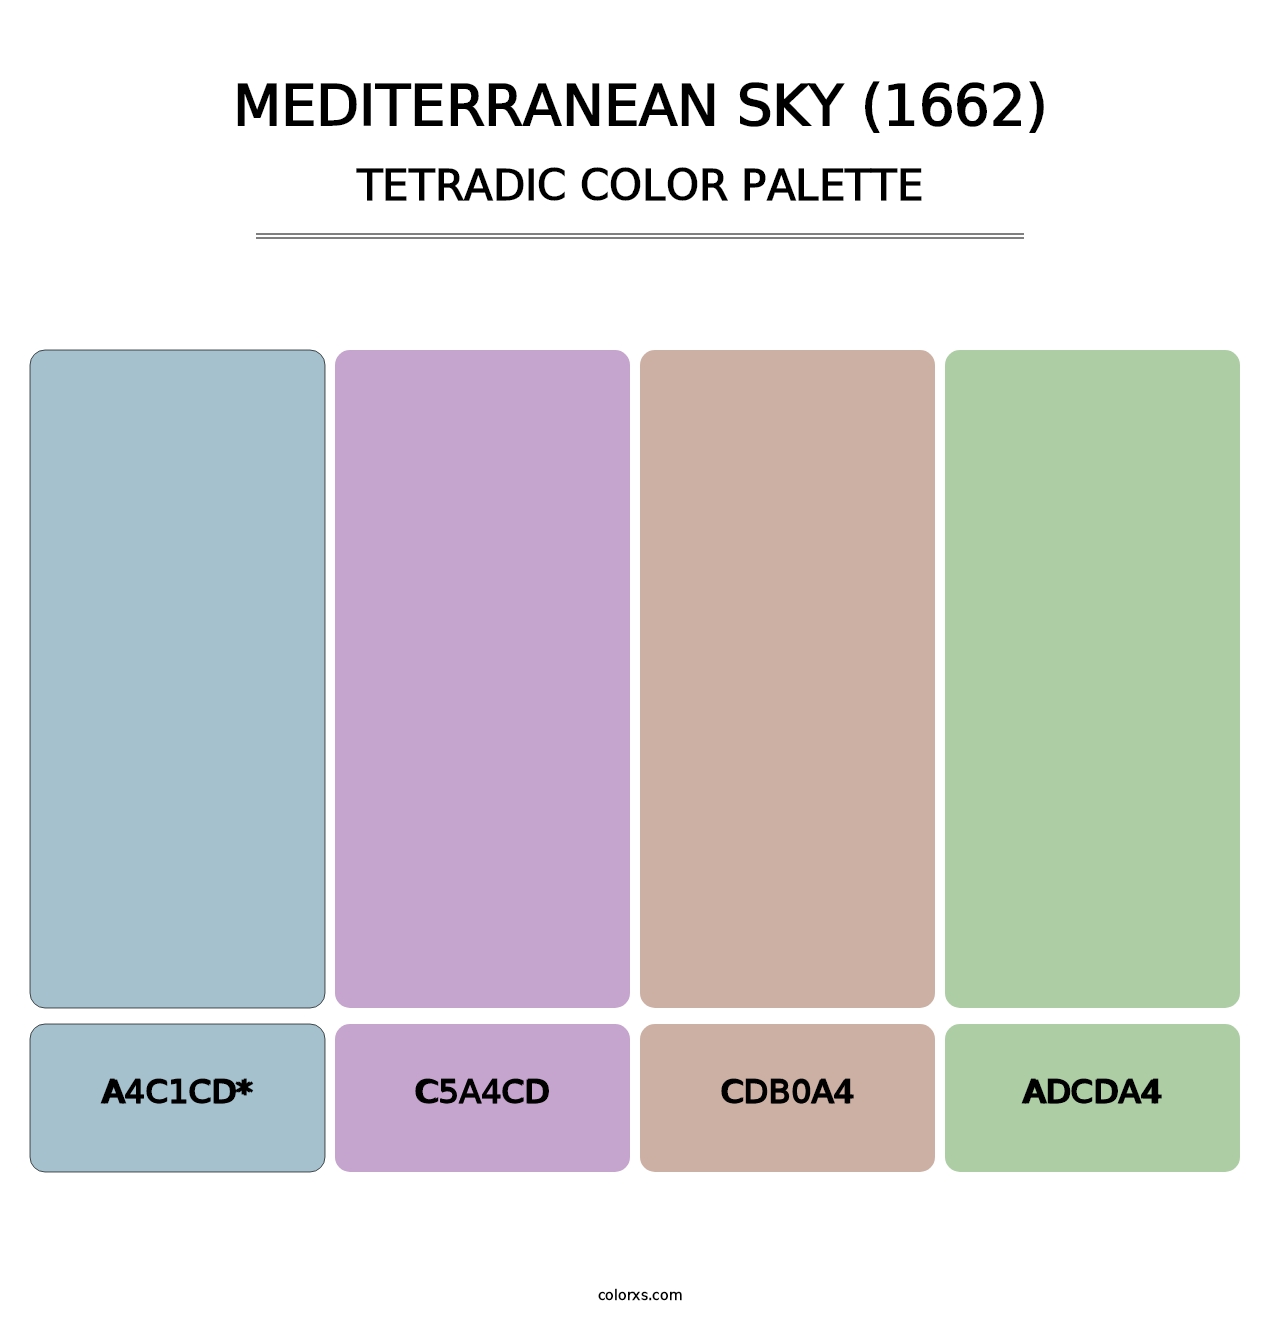 Mediterranean Sky (1662) - Tetradic Color Palette